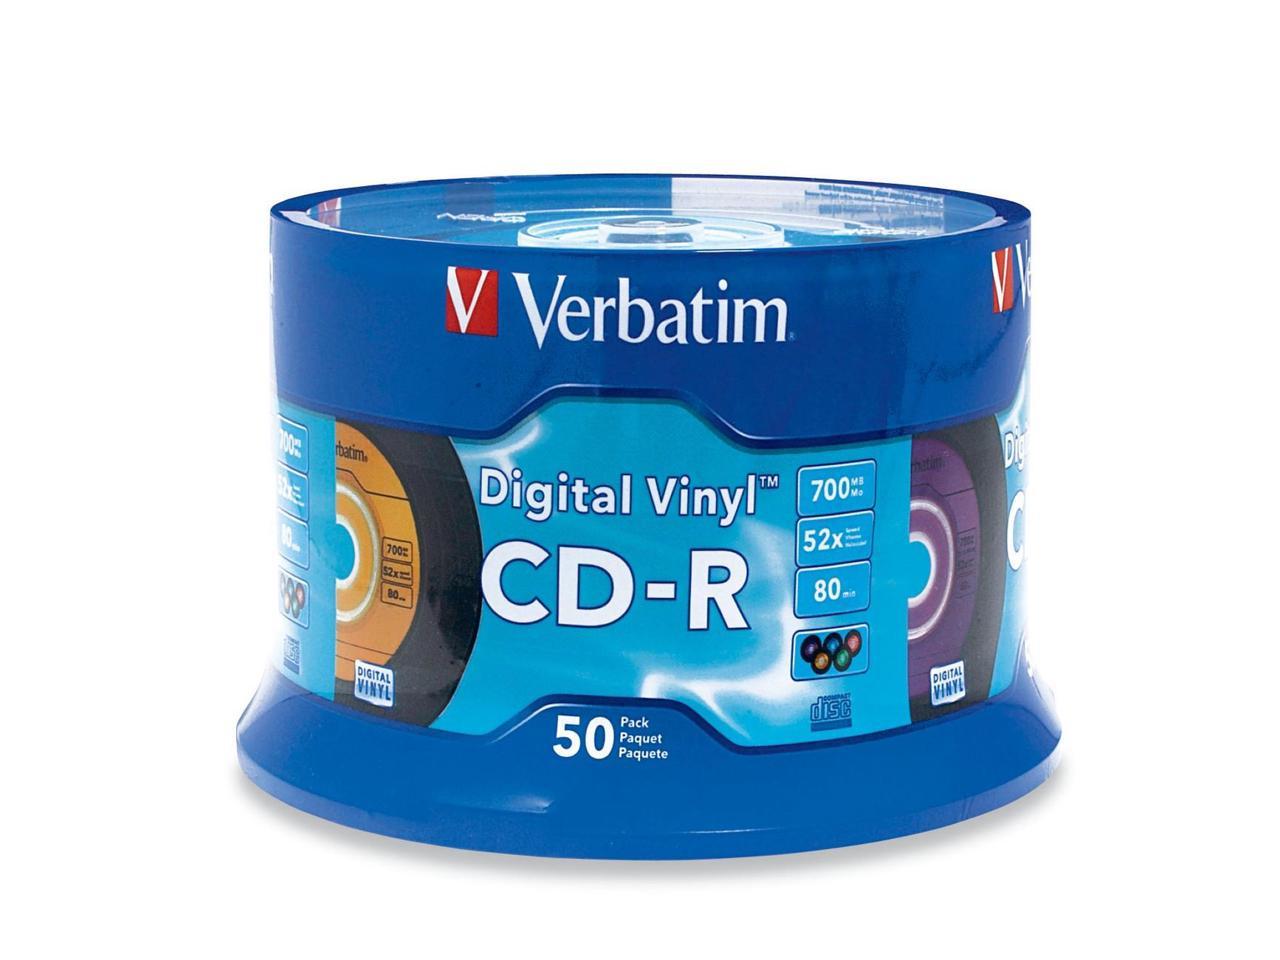 Verbatim Digital Vinyl 700MB 52X CD-R 50 Packs Spindle Disc Model 94587 - image 1 of 2